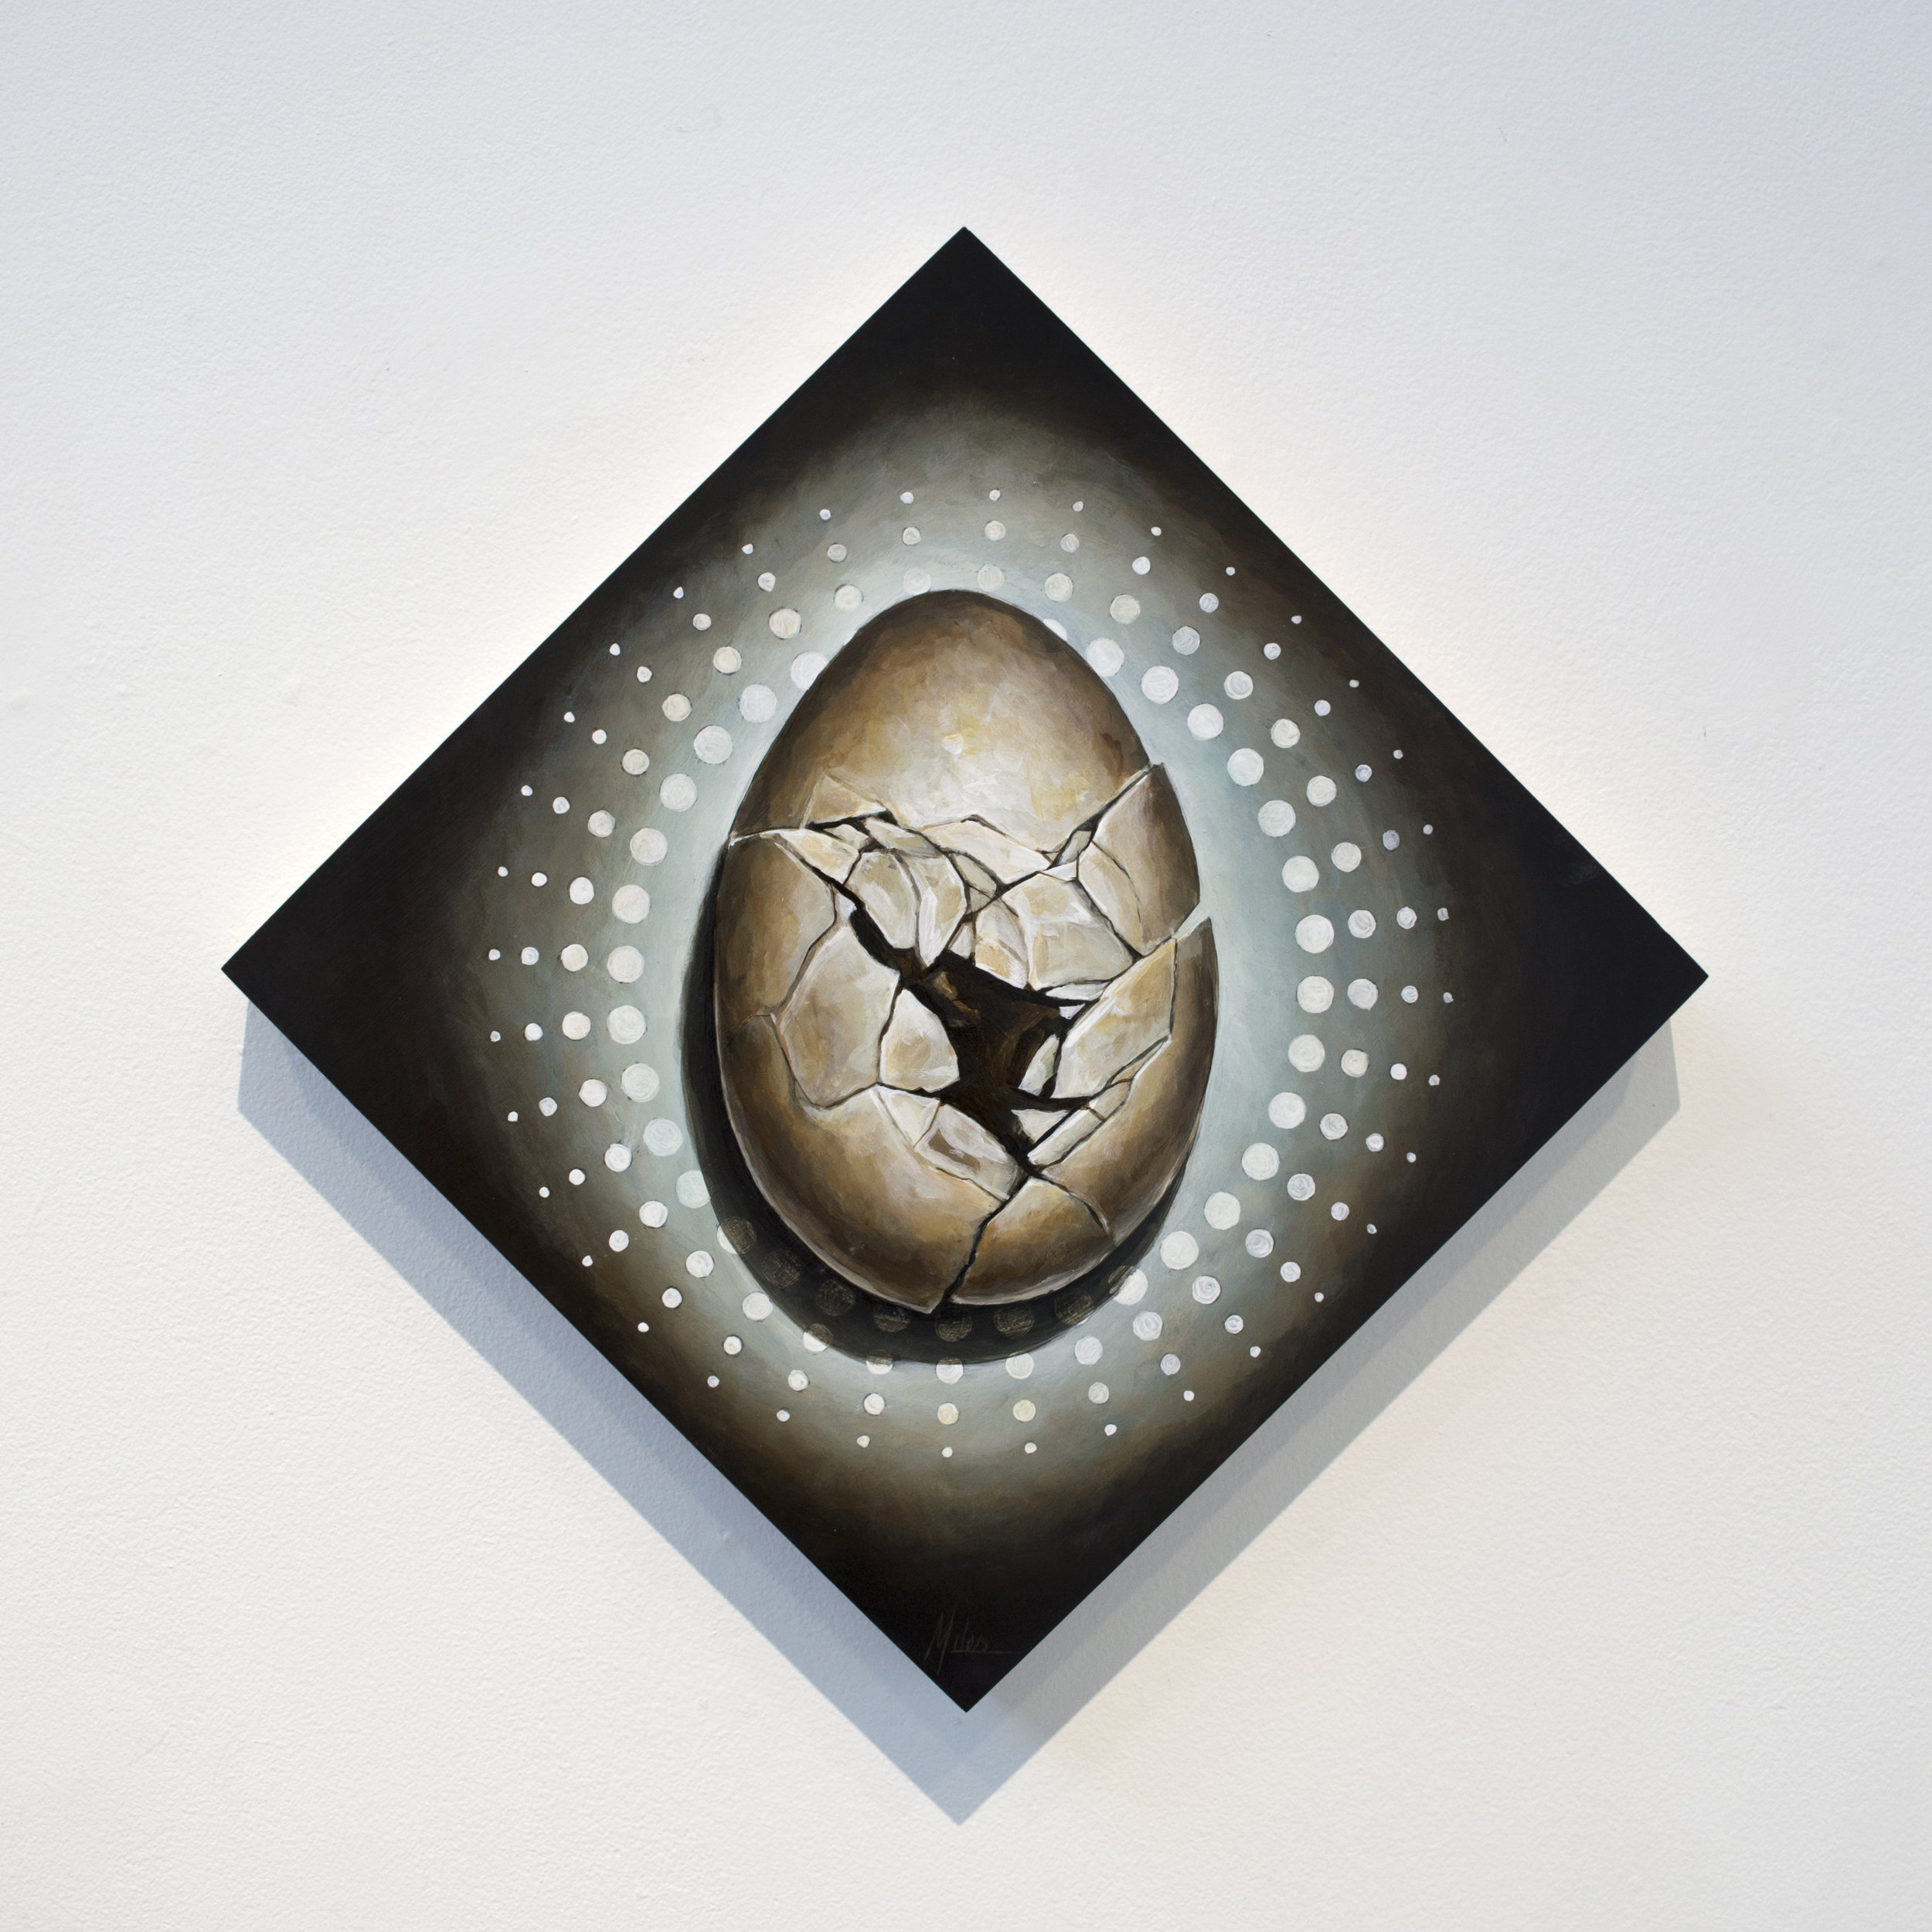   Cosmos   acrylic on panel  12” x 12” 